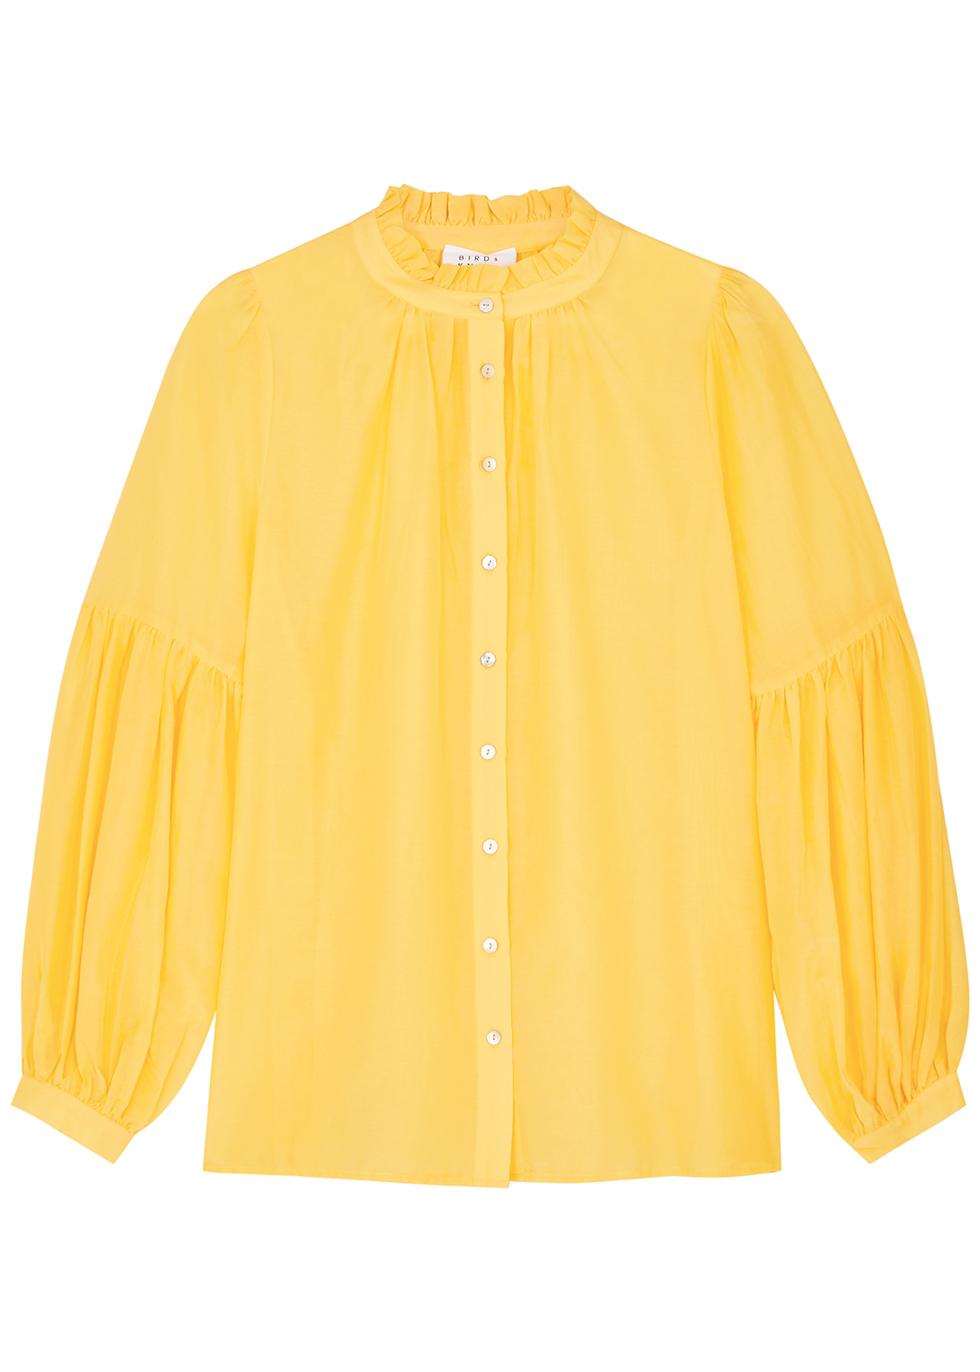 Eddy yellow cotton-blend shirt by BIRD&KNOLL